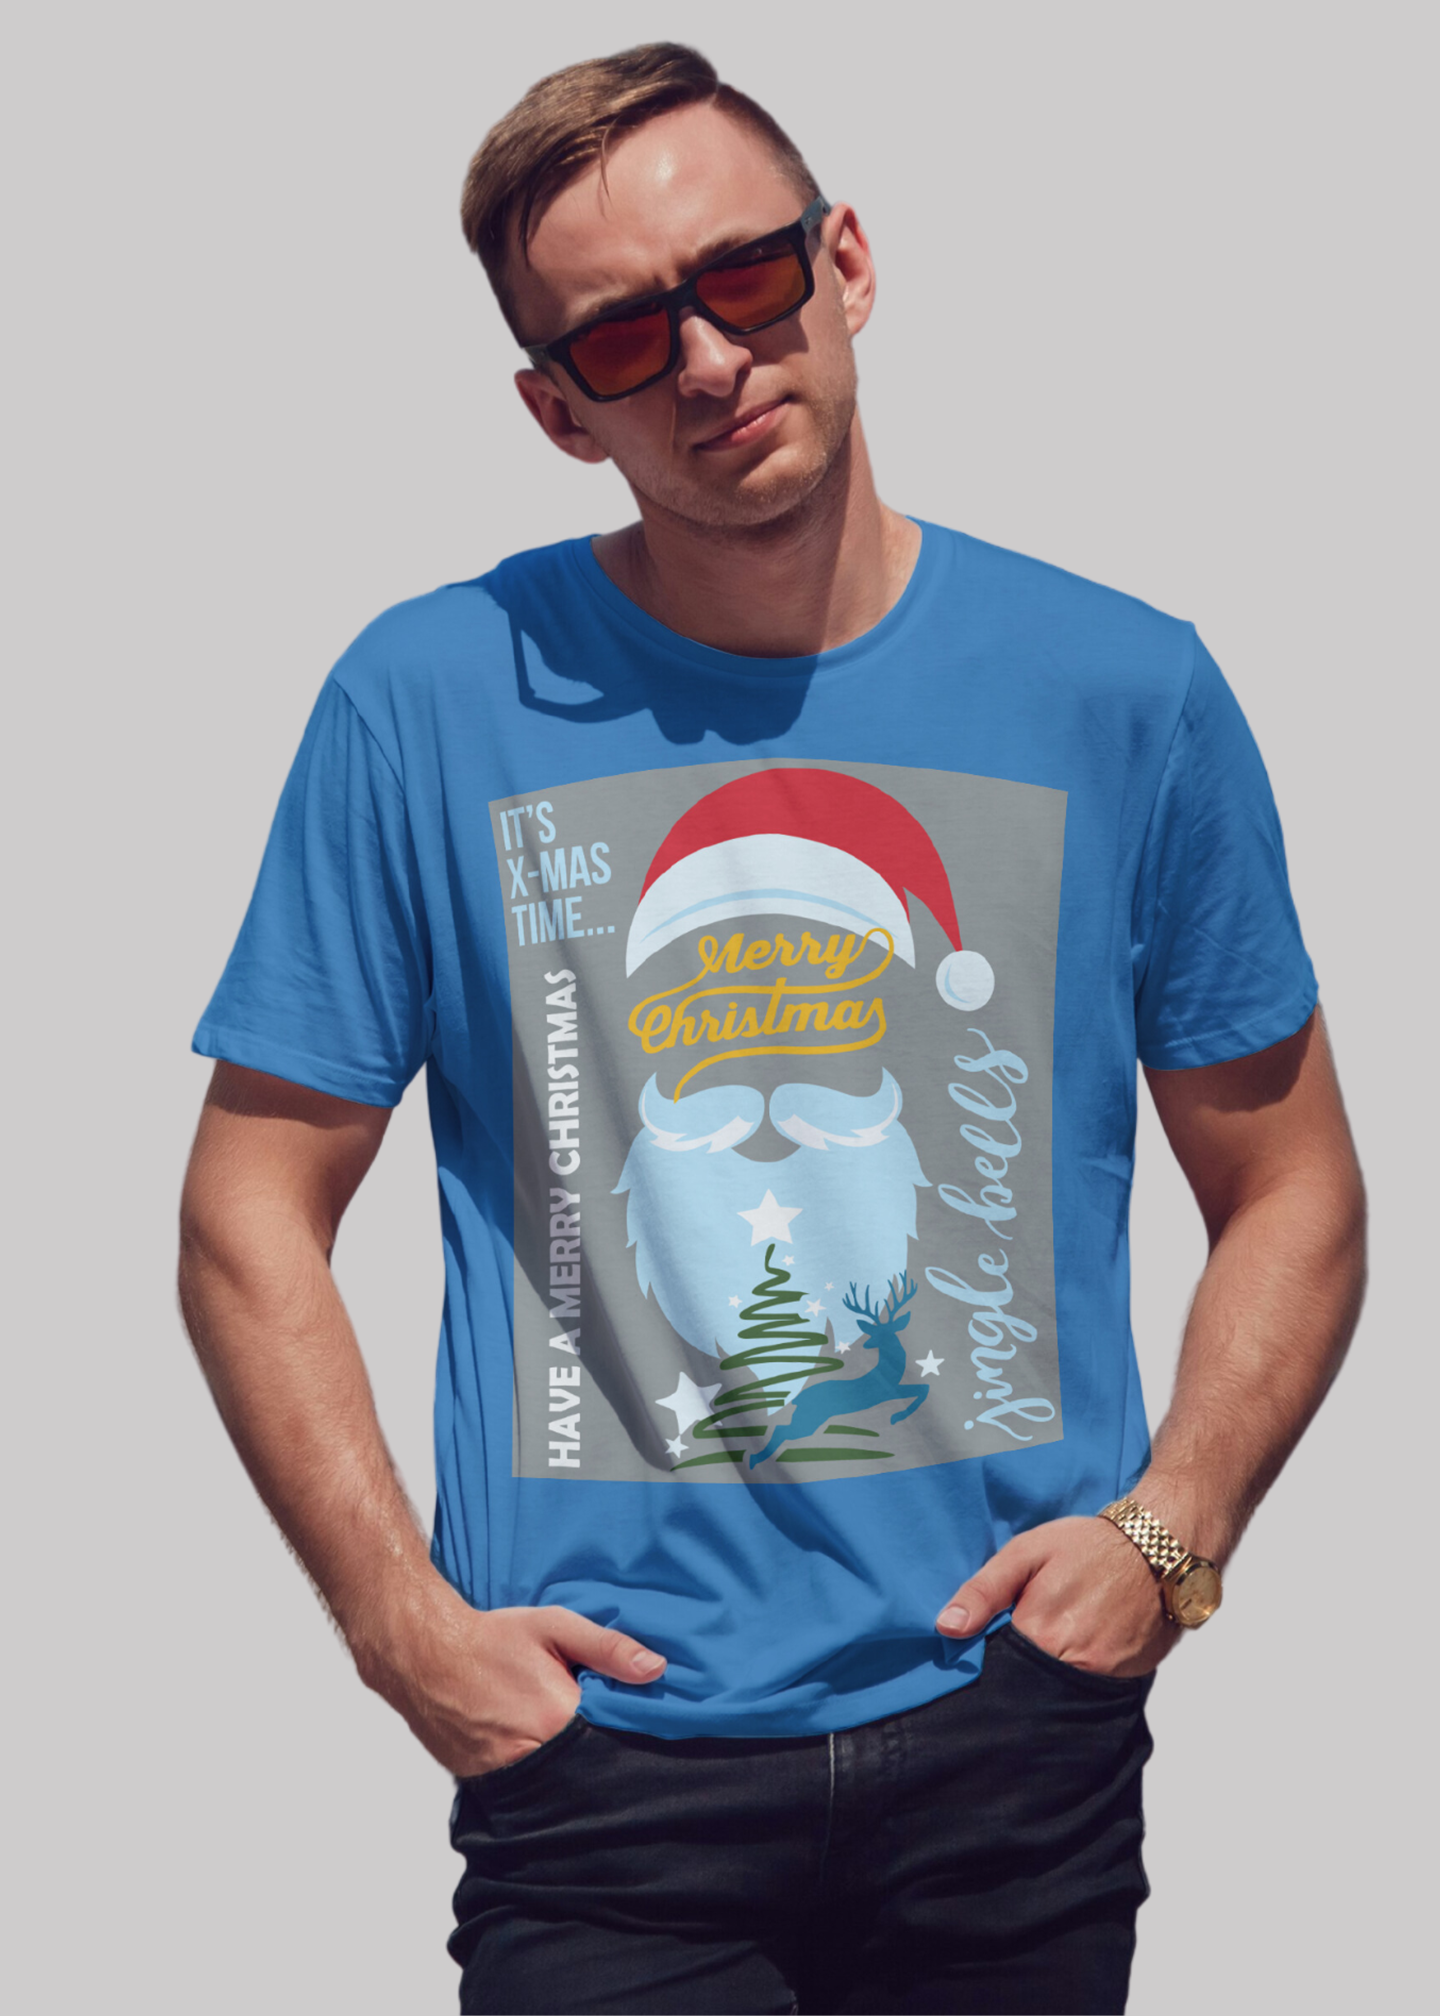 Merry Christmas Printed Half Sleeve Premium Cotton T-shirt For Men